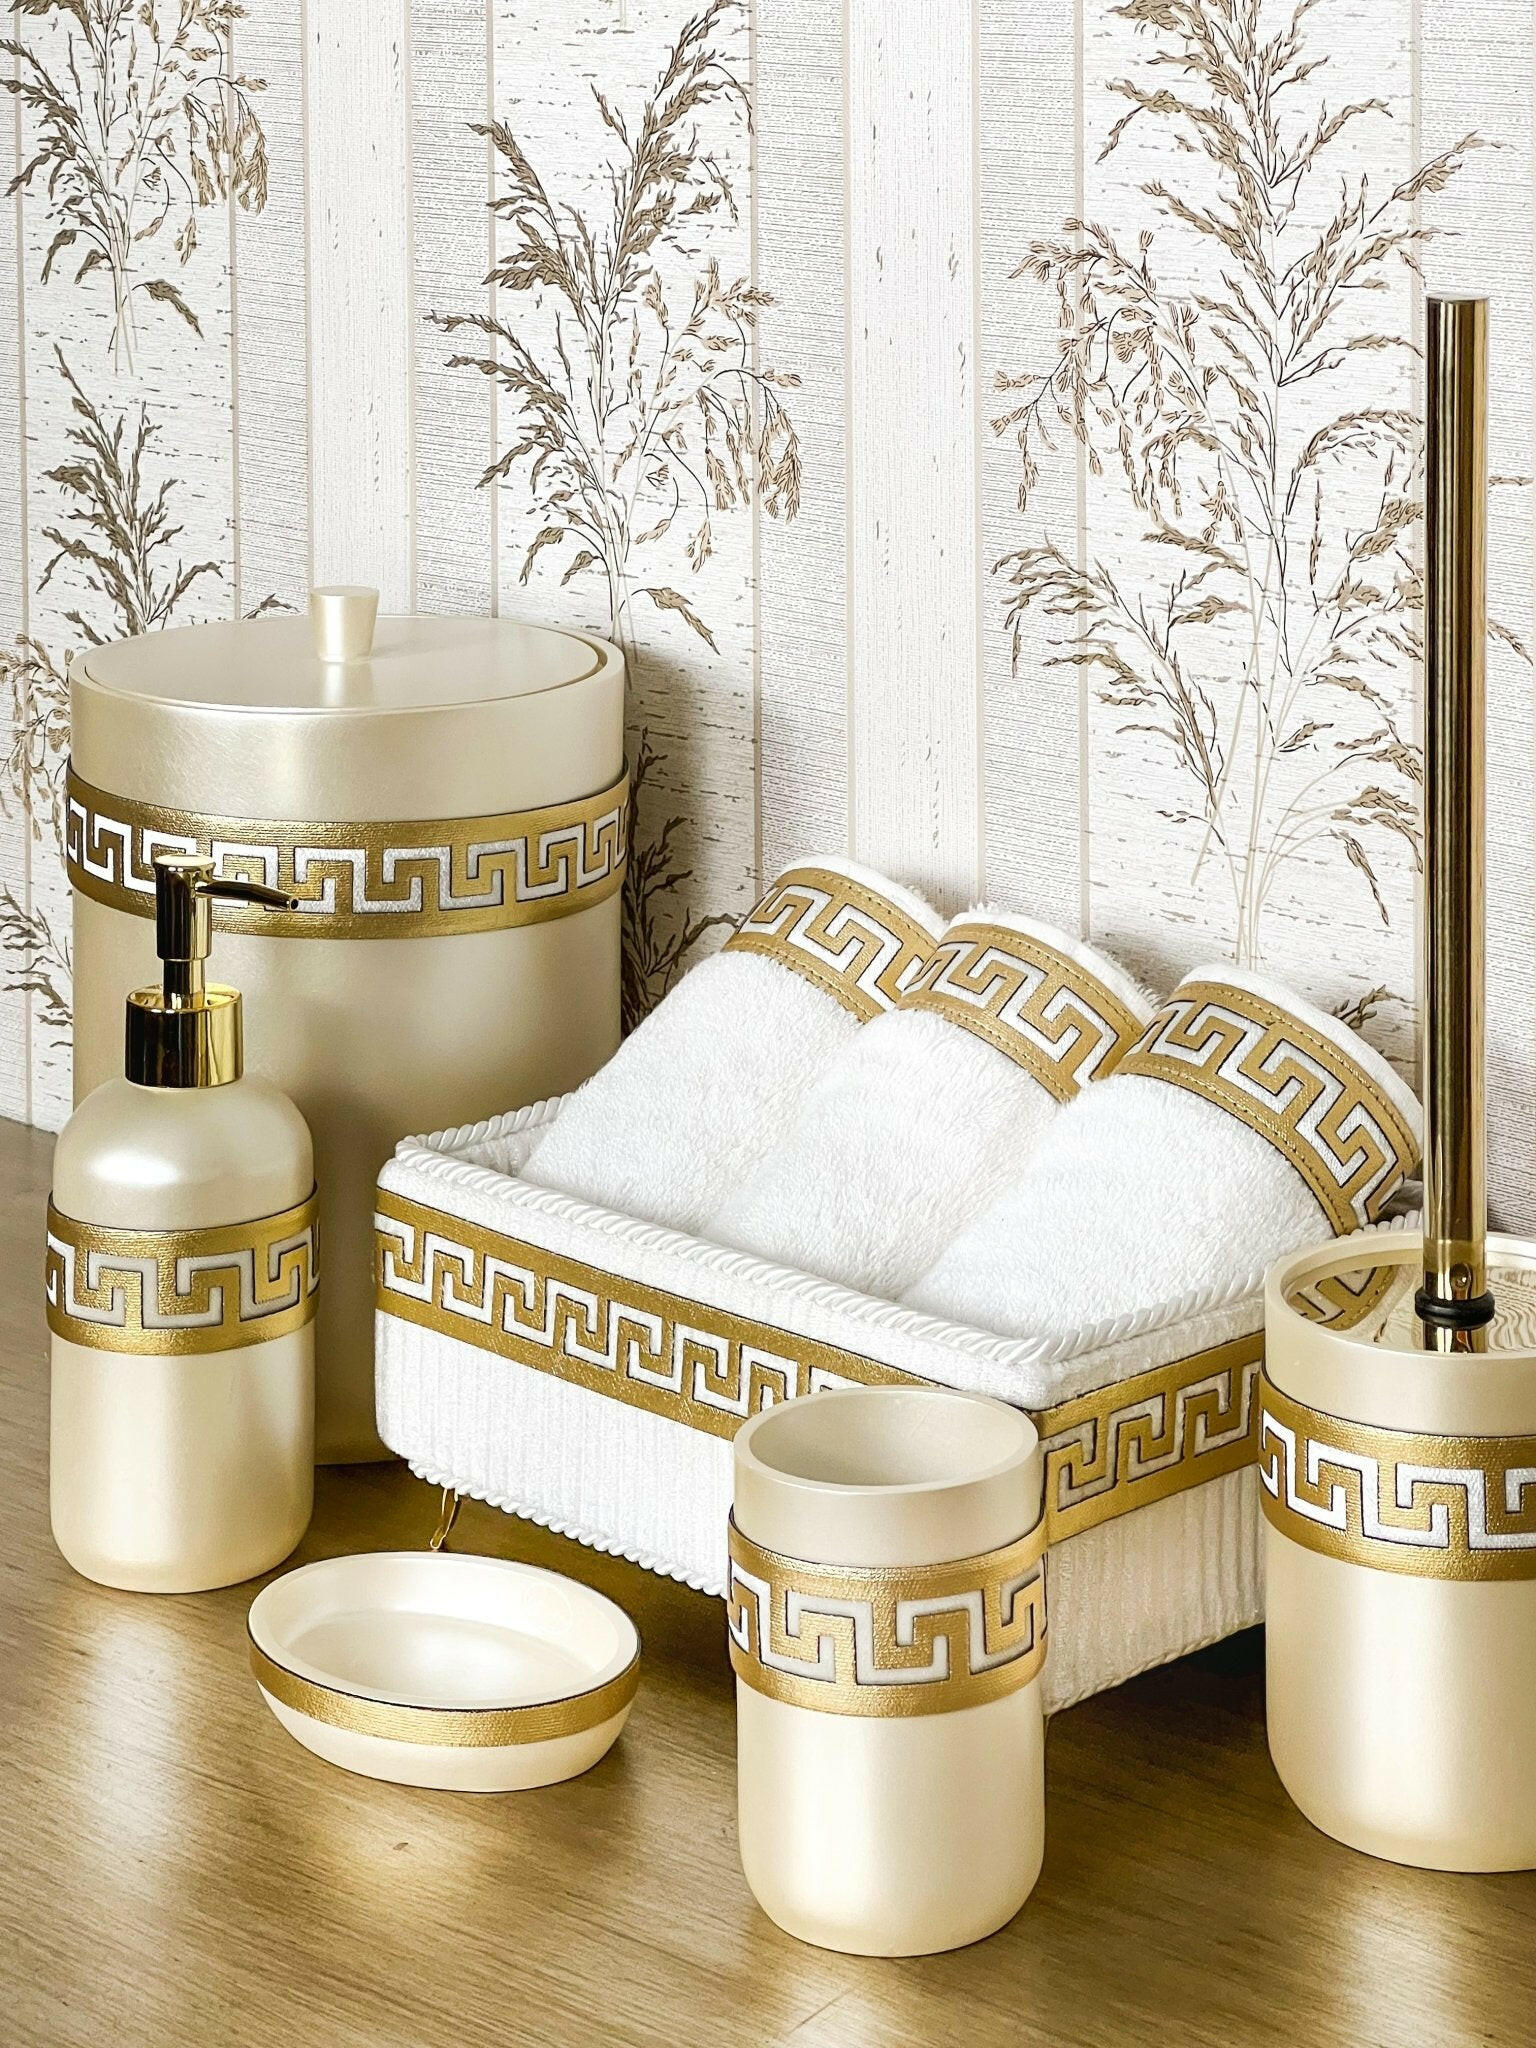 Anka Bathroom Set - Creative Home, Resin Bathroom Accessory Sets, Versace Style Greek Key Patterned Cream & Gold Bathroom Decor, Bamboo Ecru Turkish Towels,BS-CH-ANKACG-BATB